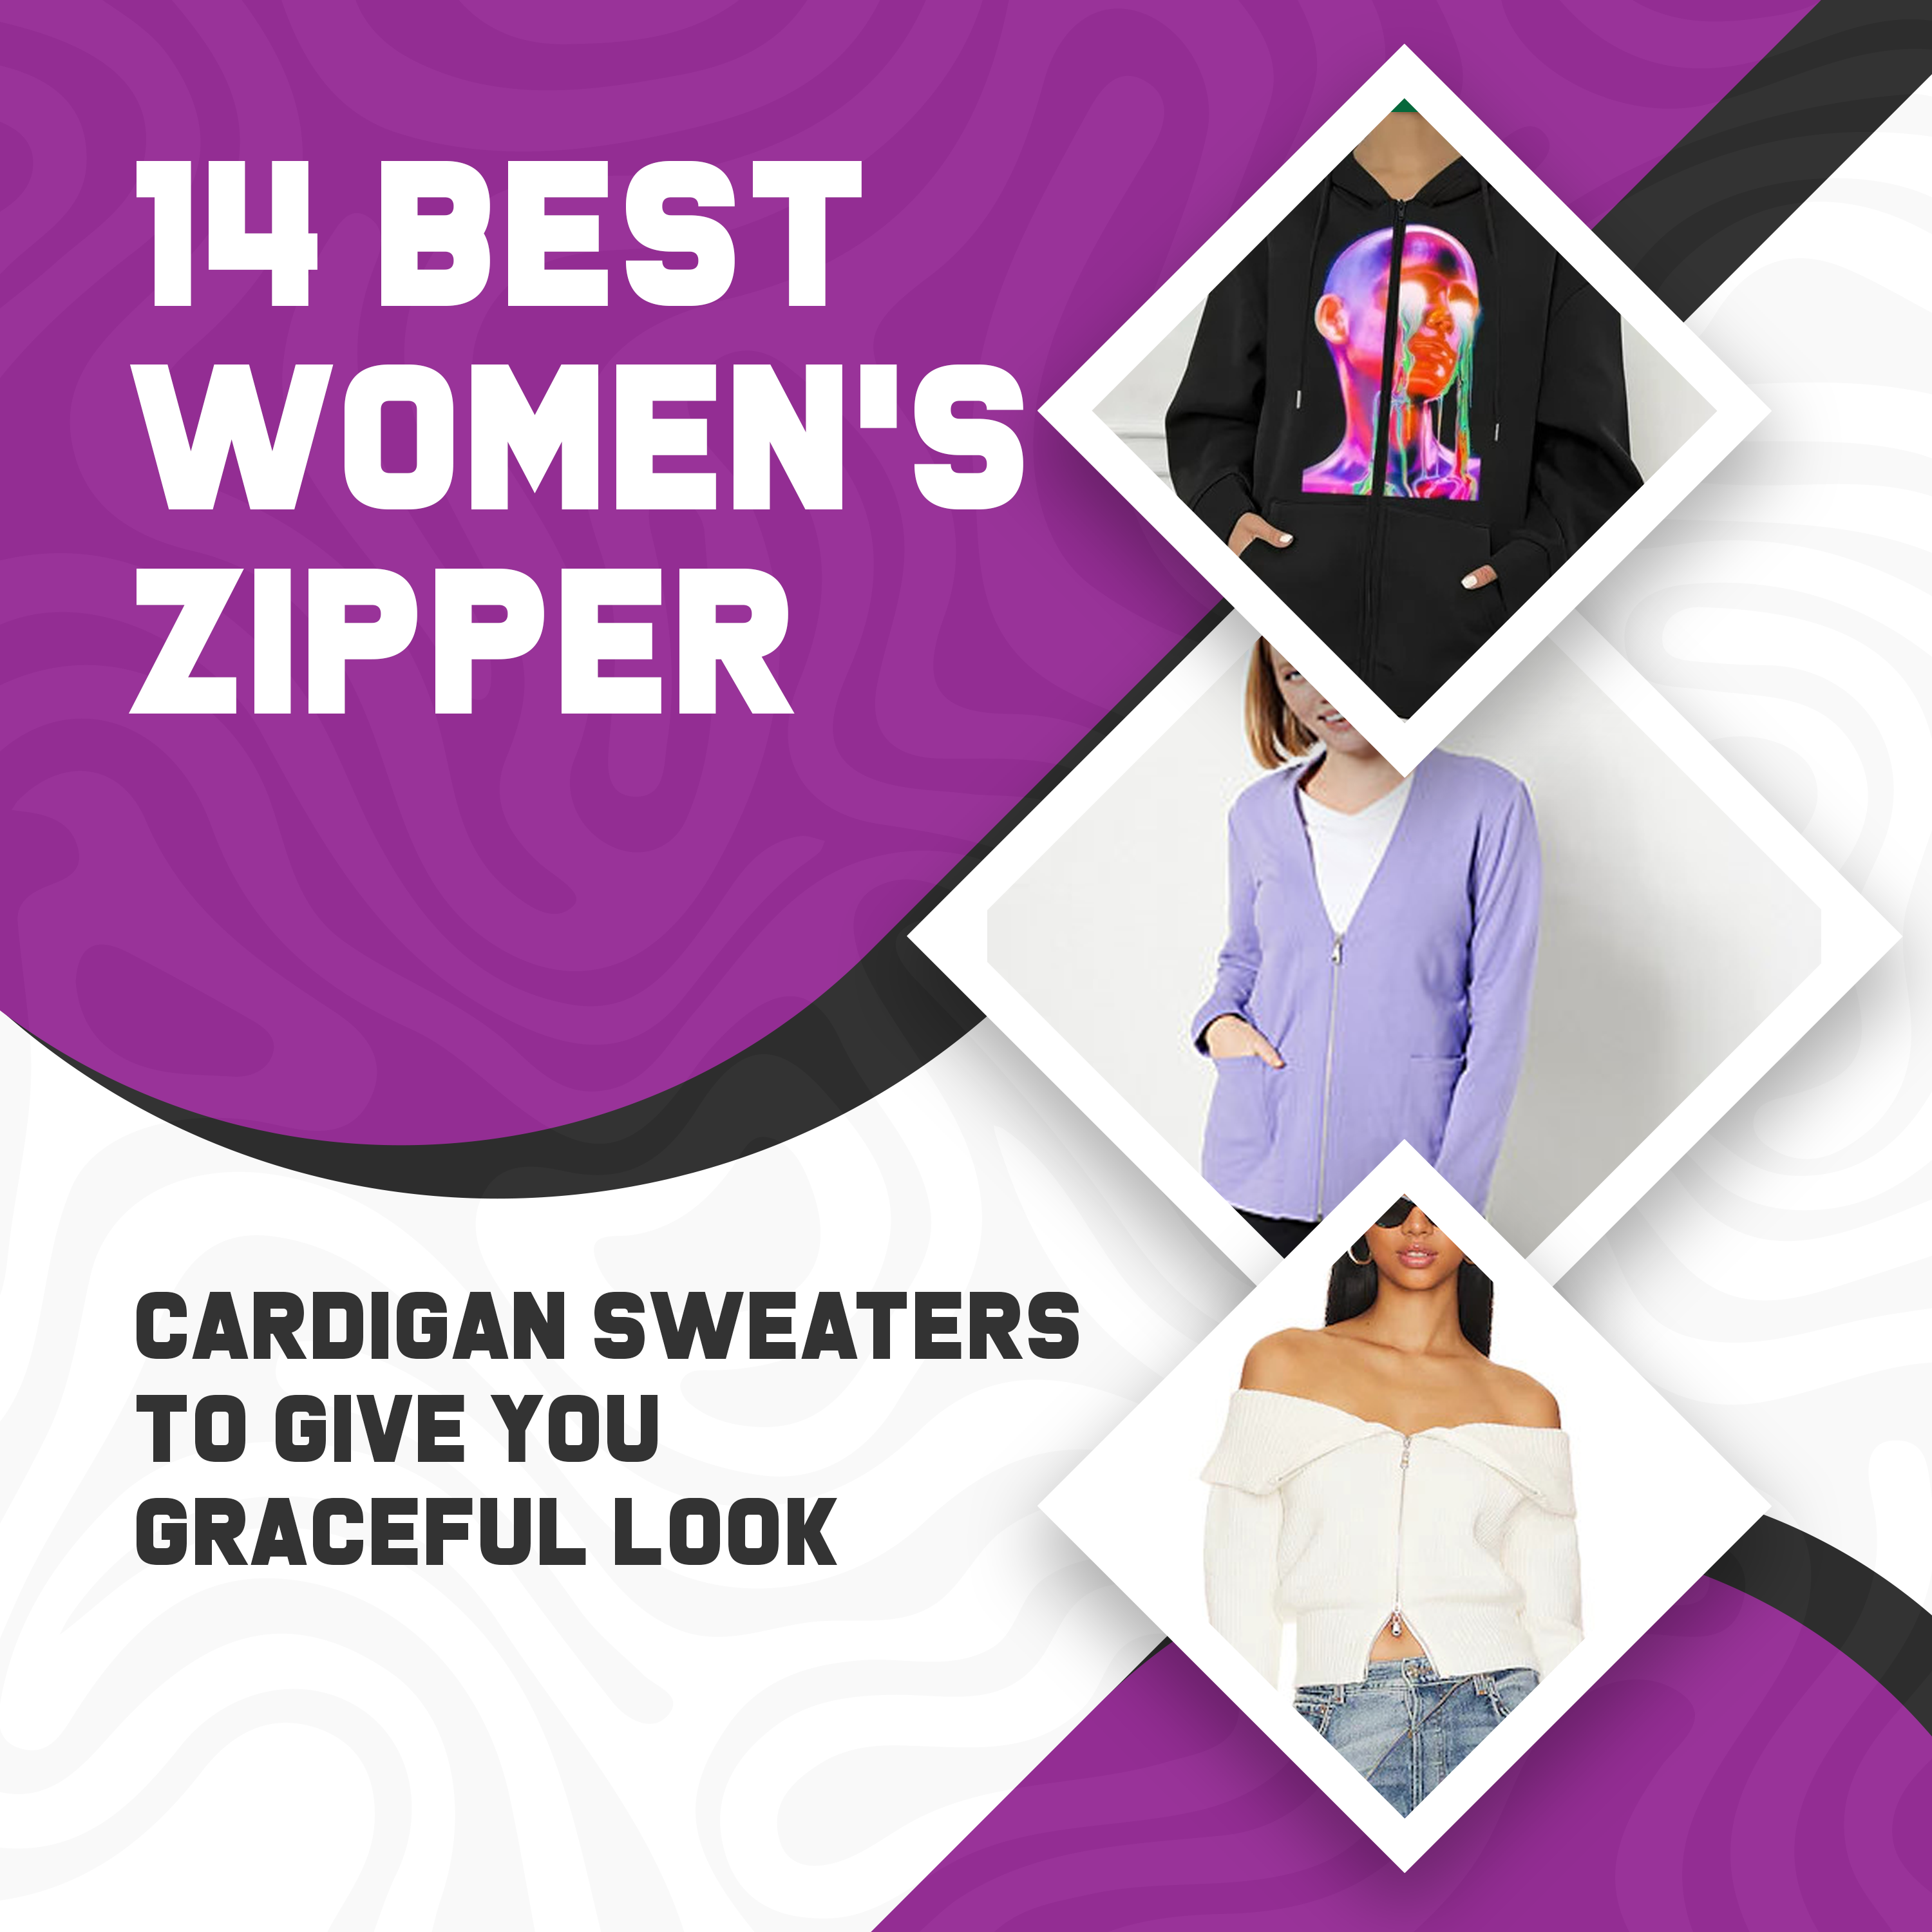 14 Best Women’s Zipper Cardigan Sweaters To Give You Graceful Look